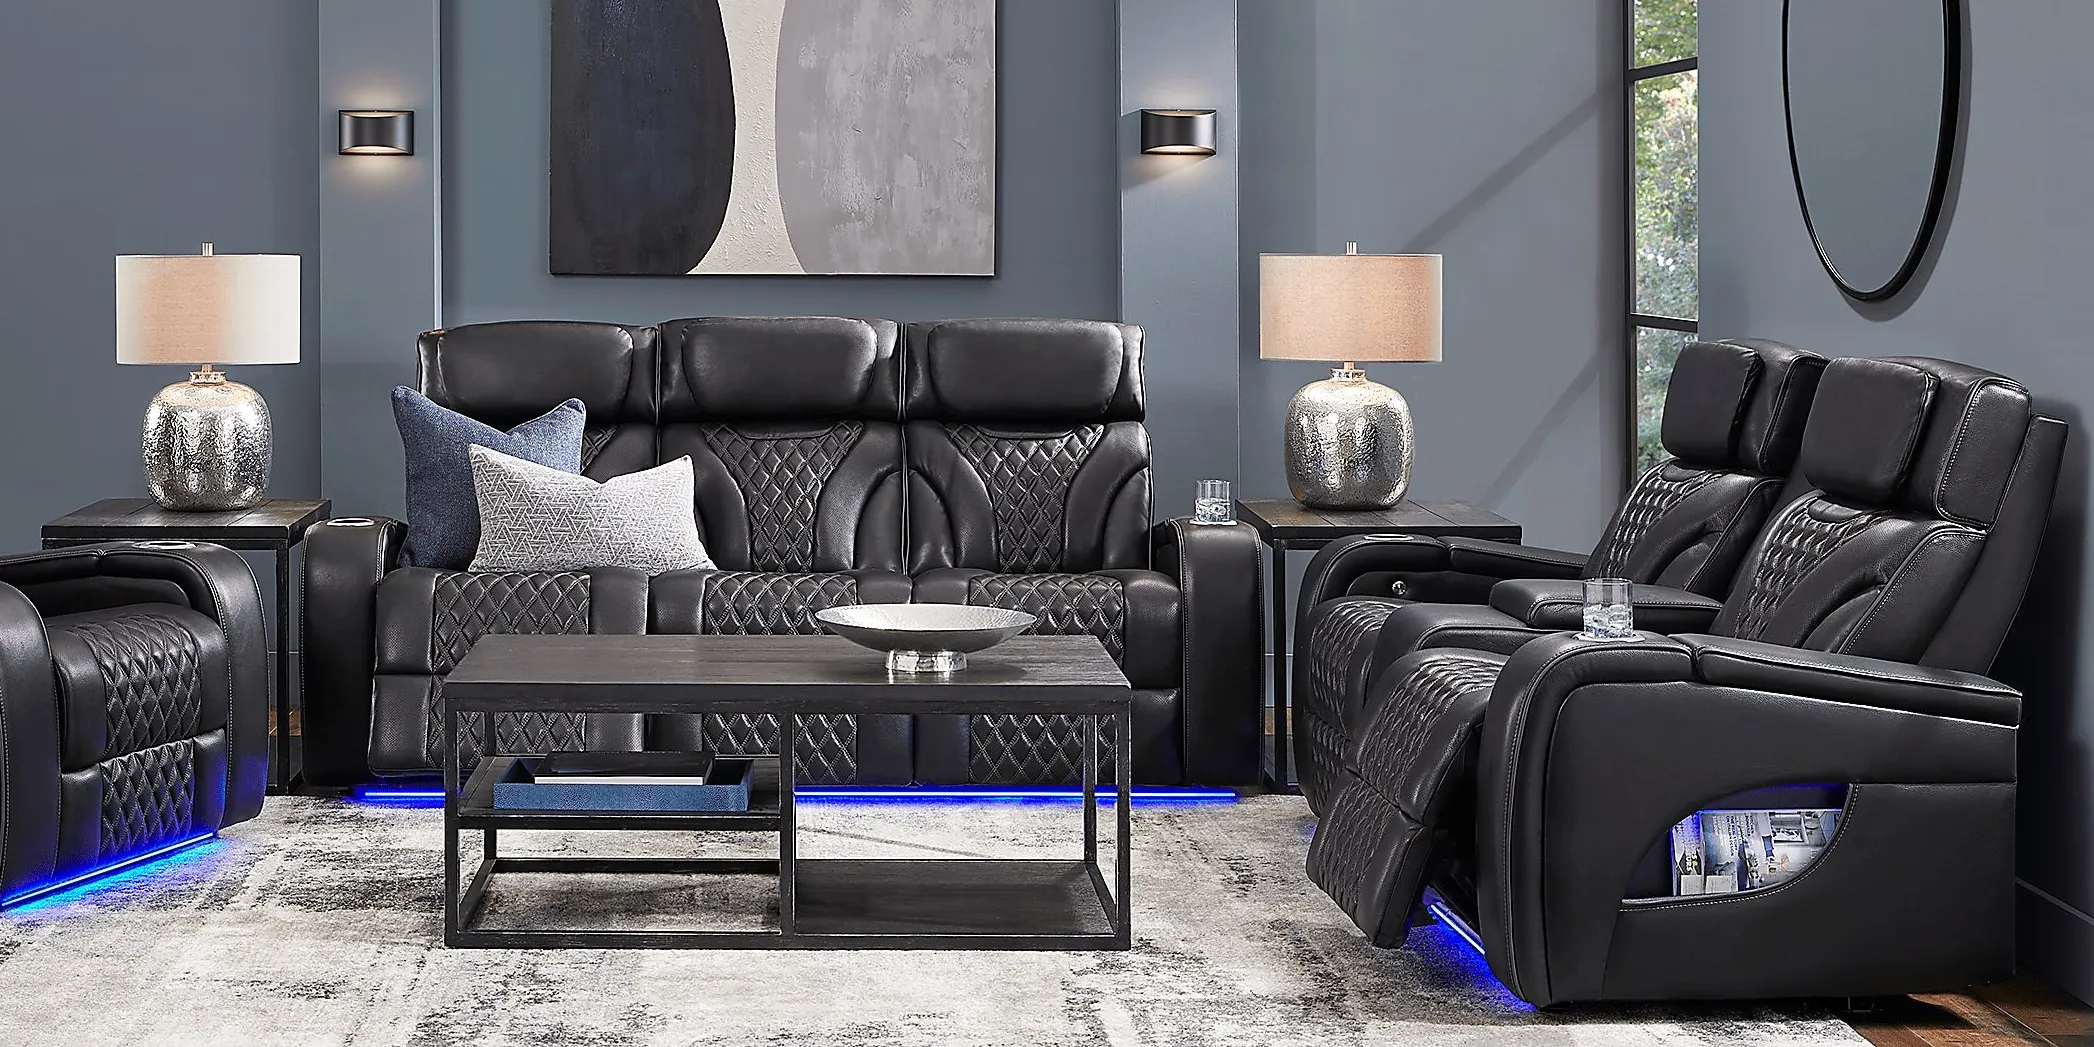 Horizon Ridge Black Leather 2 Pc Triple Power Reclining Living Room with Massage and Heat